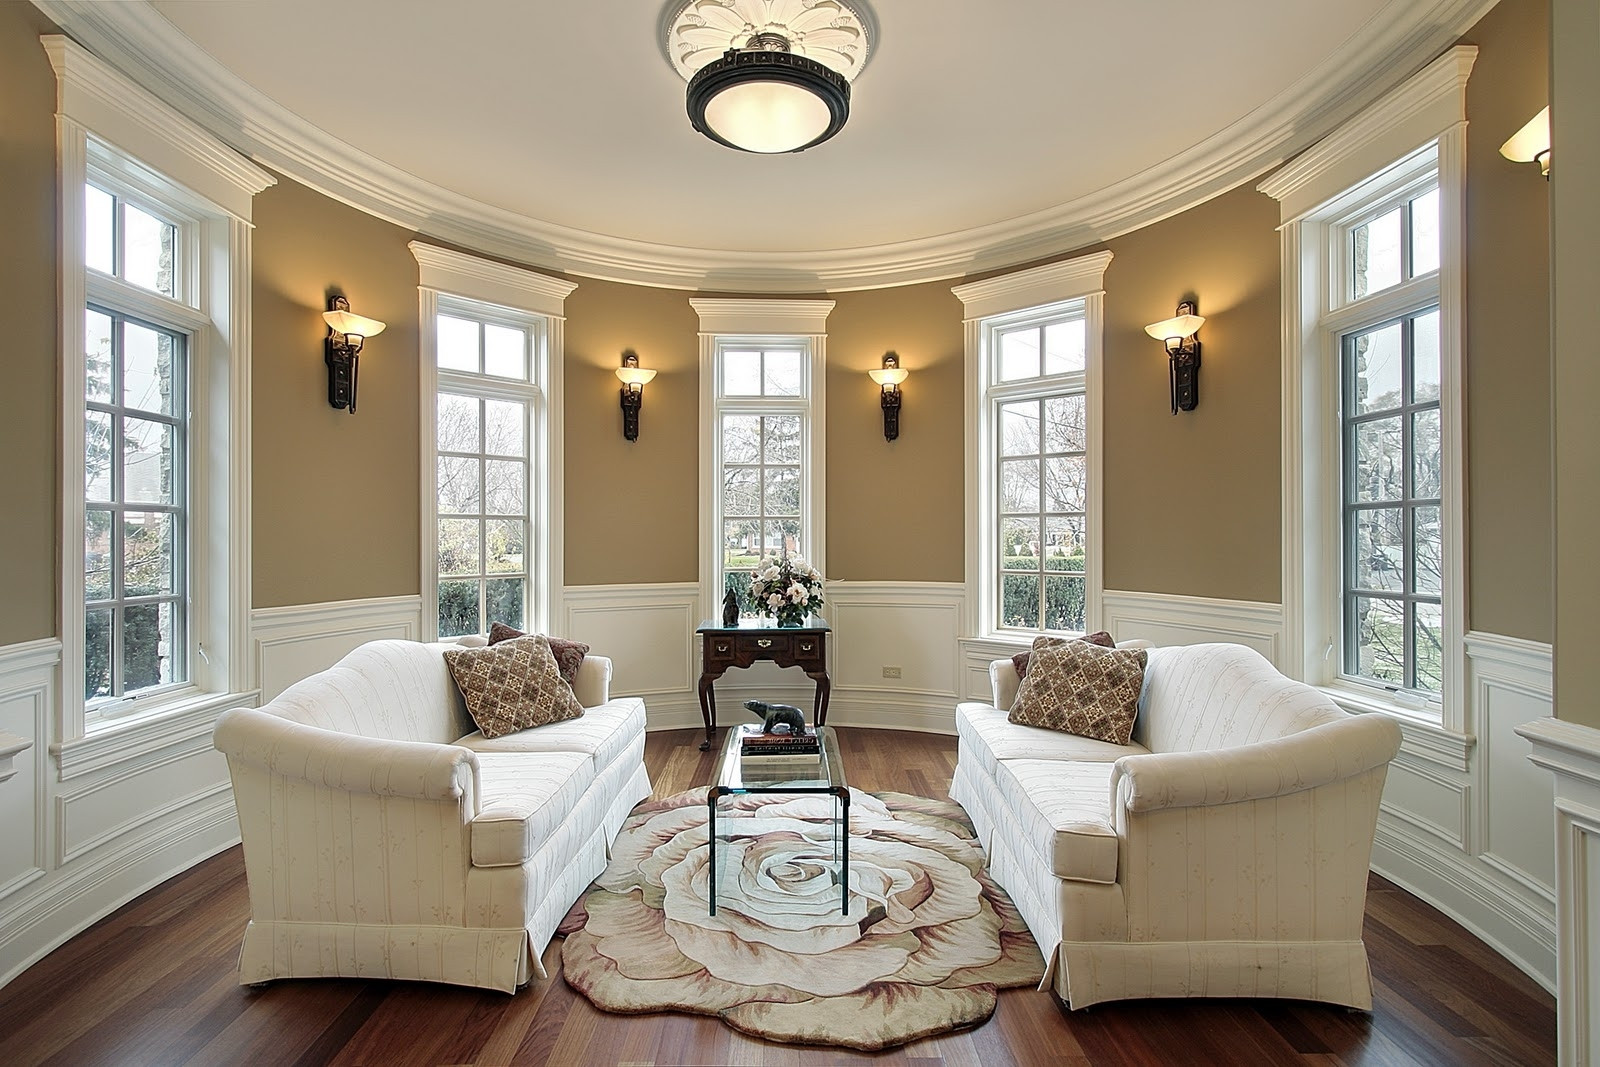 Living Room Ceiling Light
 5 Top Tips For The Best Light Fixtures